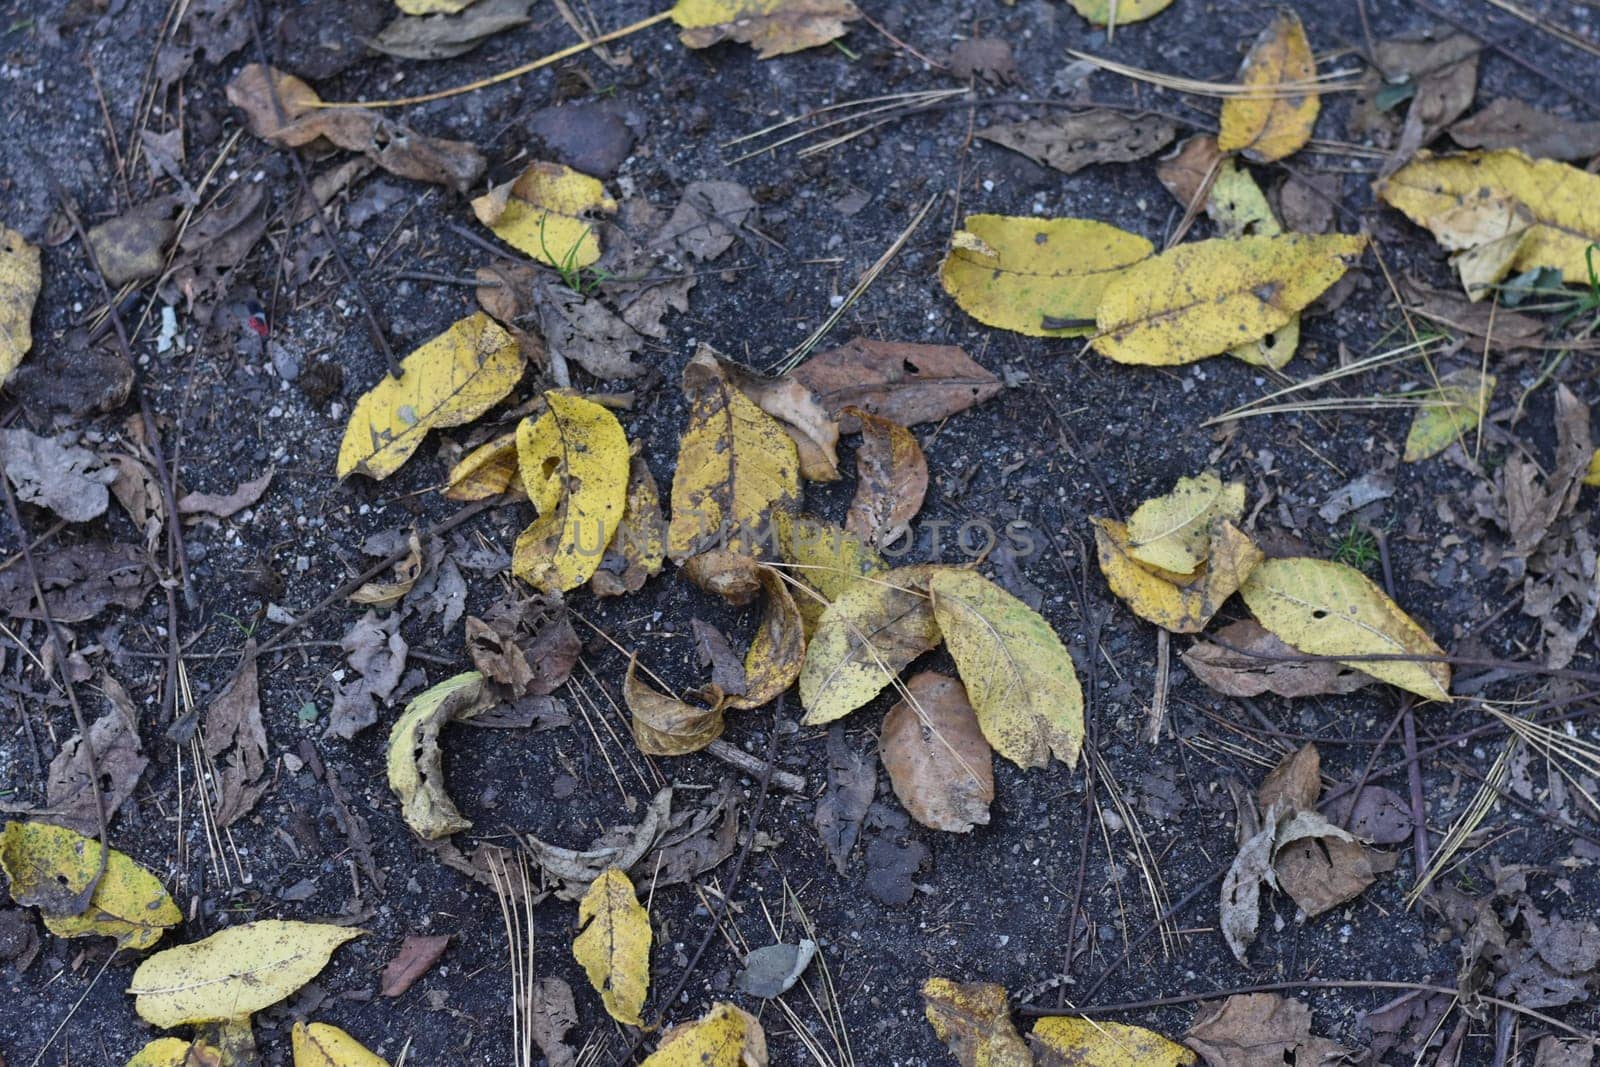 Yellow and Brown Leaves Fallen on Black Asphalt Road Background by grumblytumbleweed